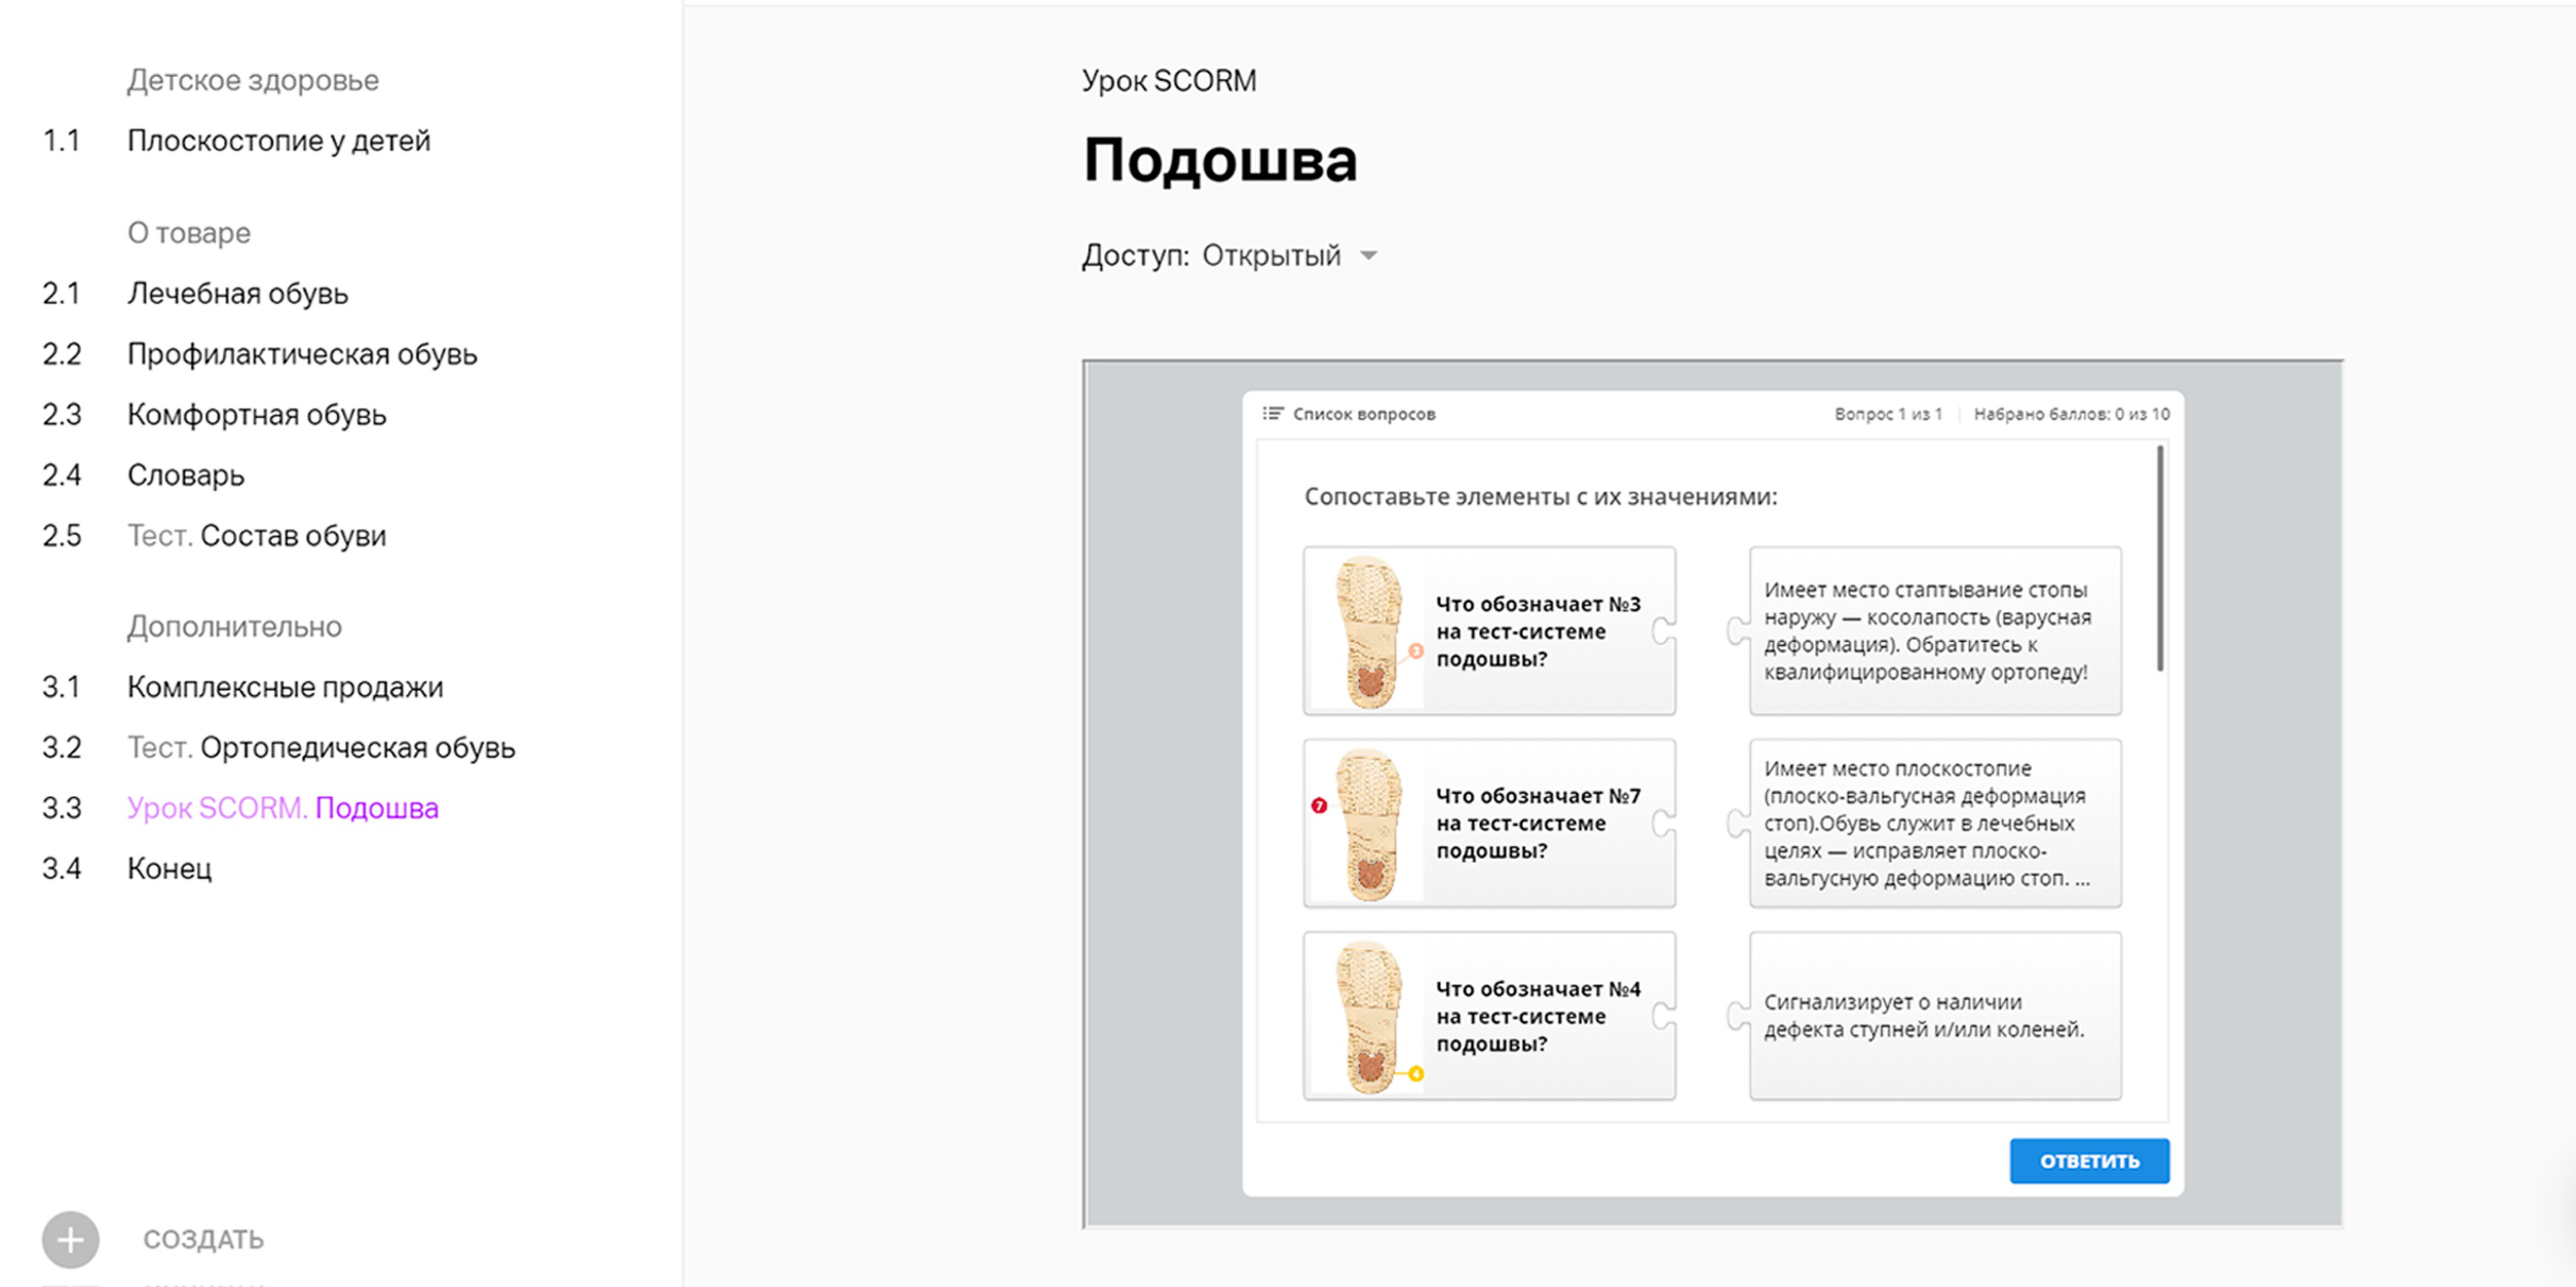 Вкладака вопросы в webiar ru. Вкладака вопросы в Webinar ru. Https link webinar